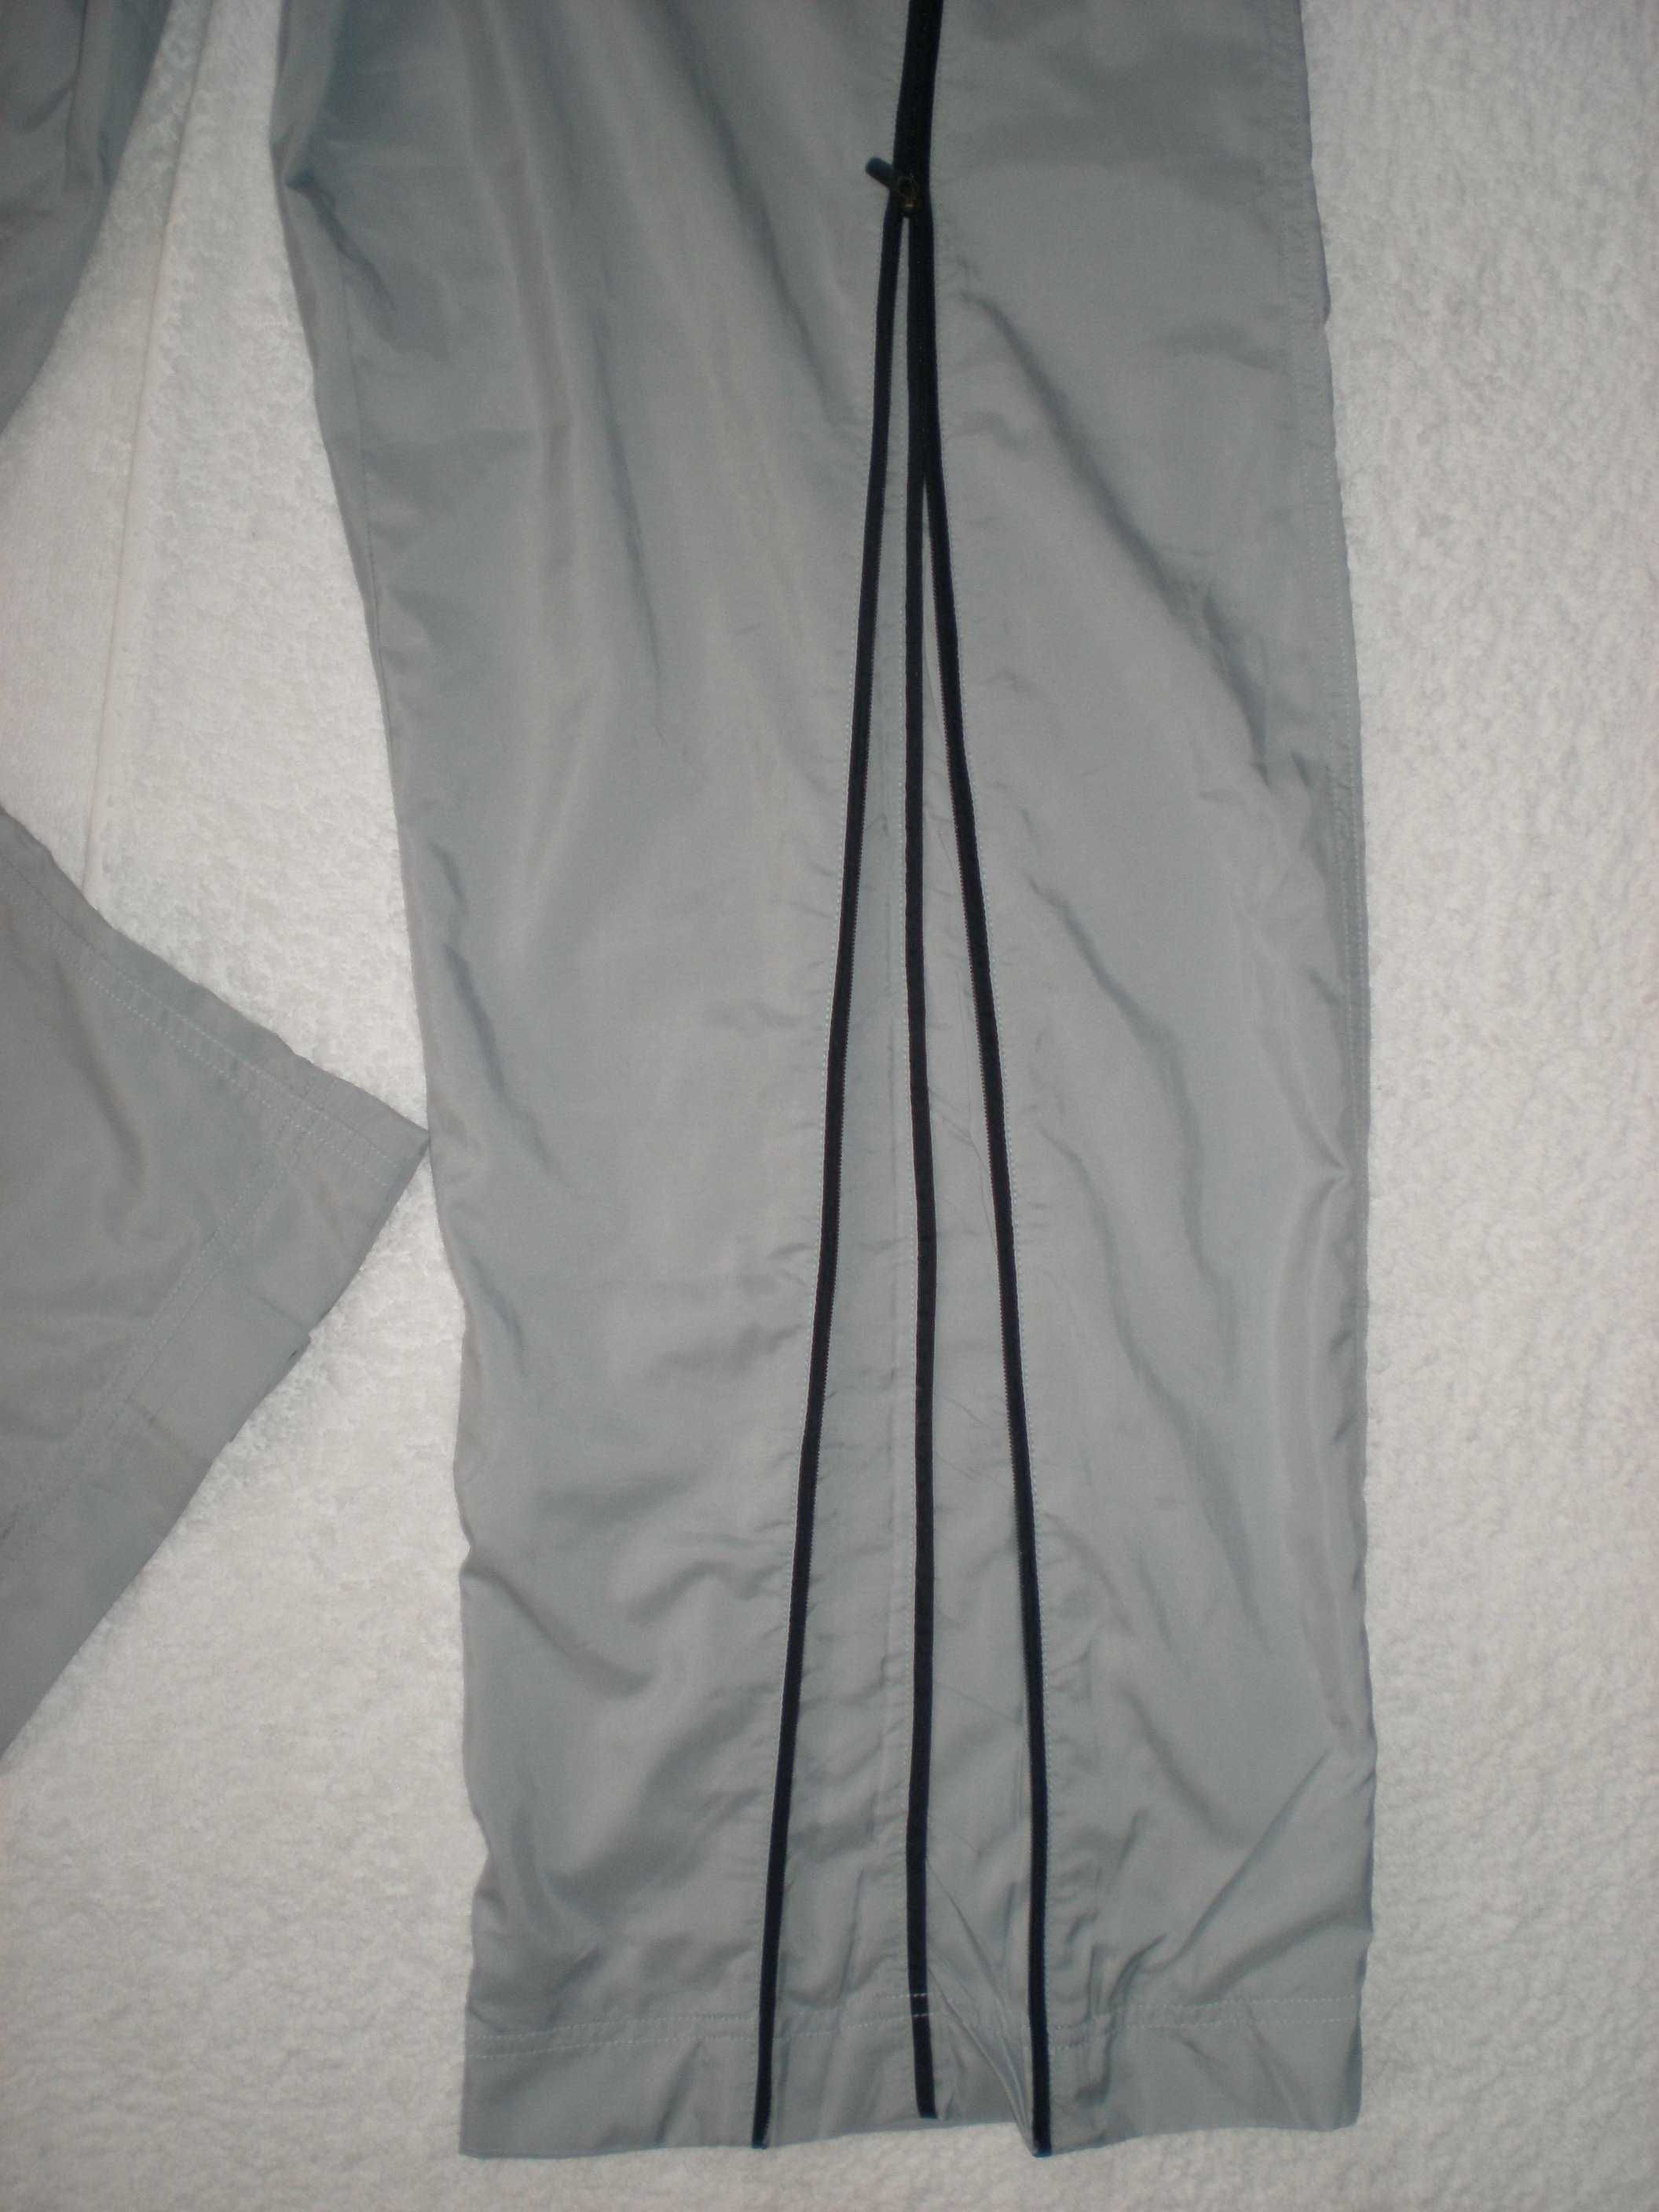 Adidas брюки р.54-56 светло-серого цвета на рост 186 см.